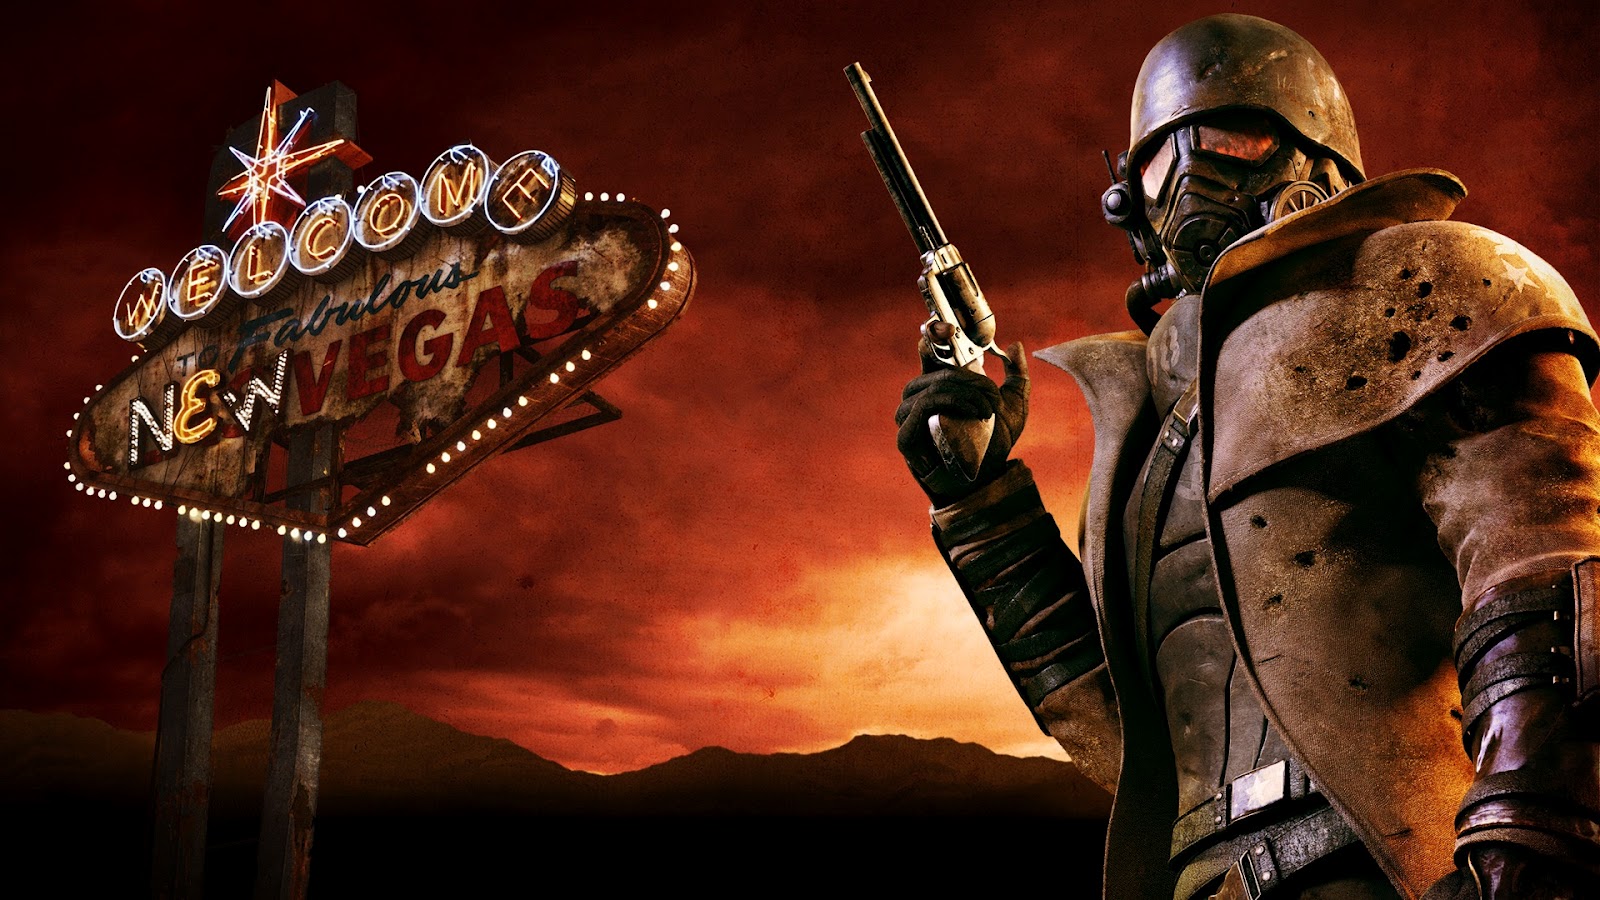 Fallout New Vegas Wallpaper In HD